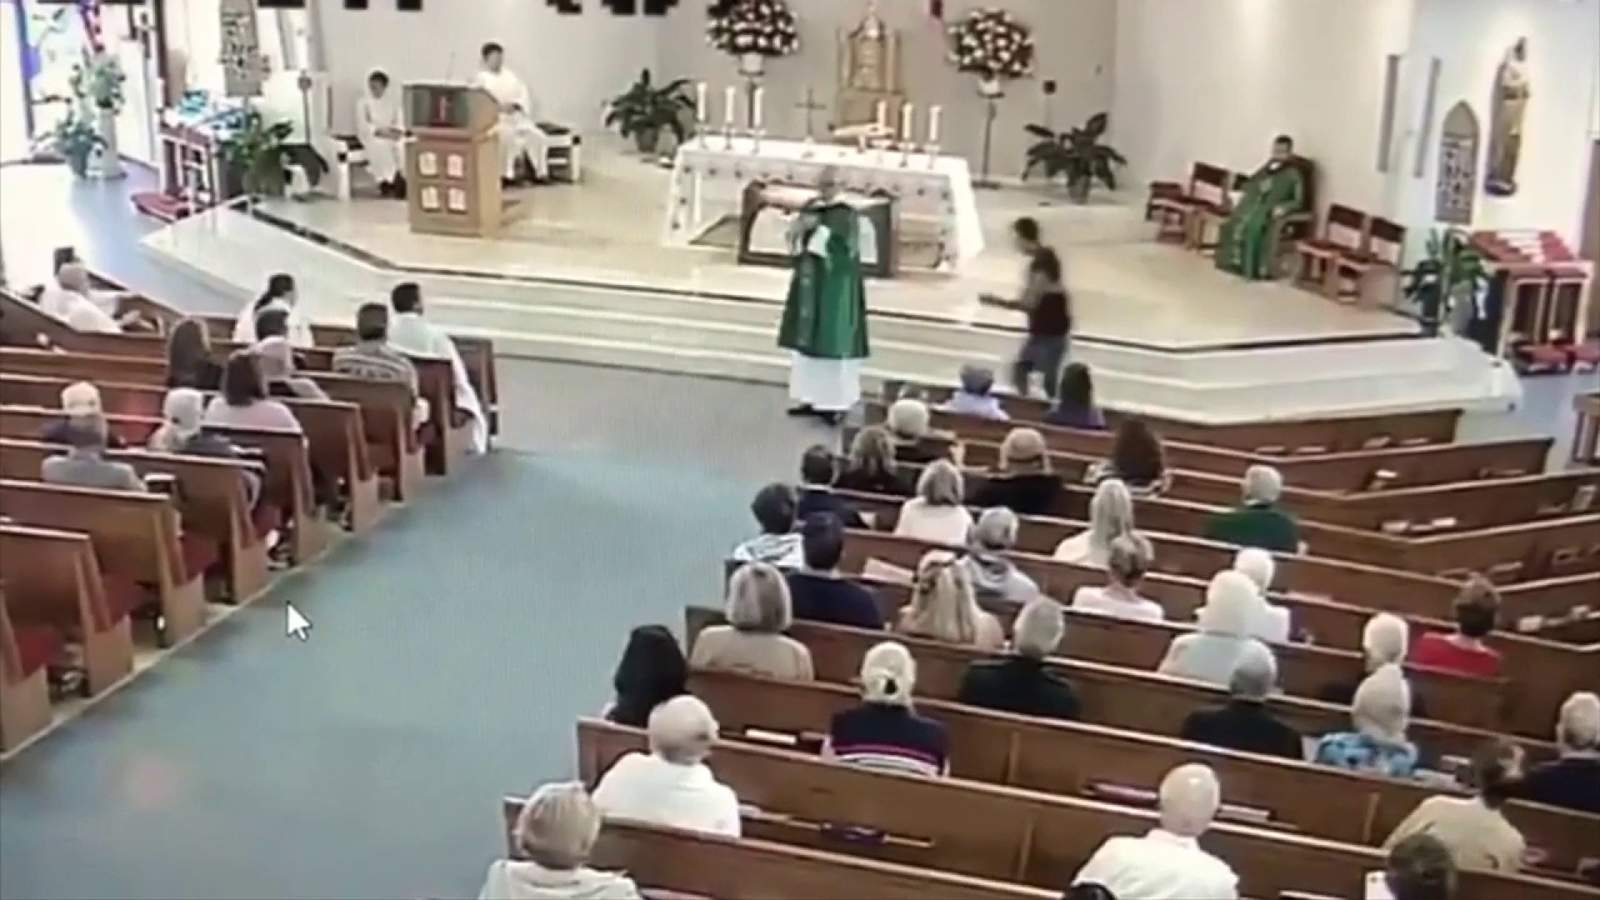 Video shows man attack Deacon during Catholic Mass at Pompano Beach church